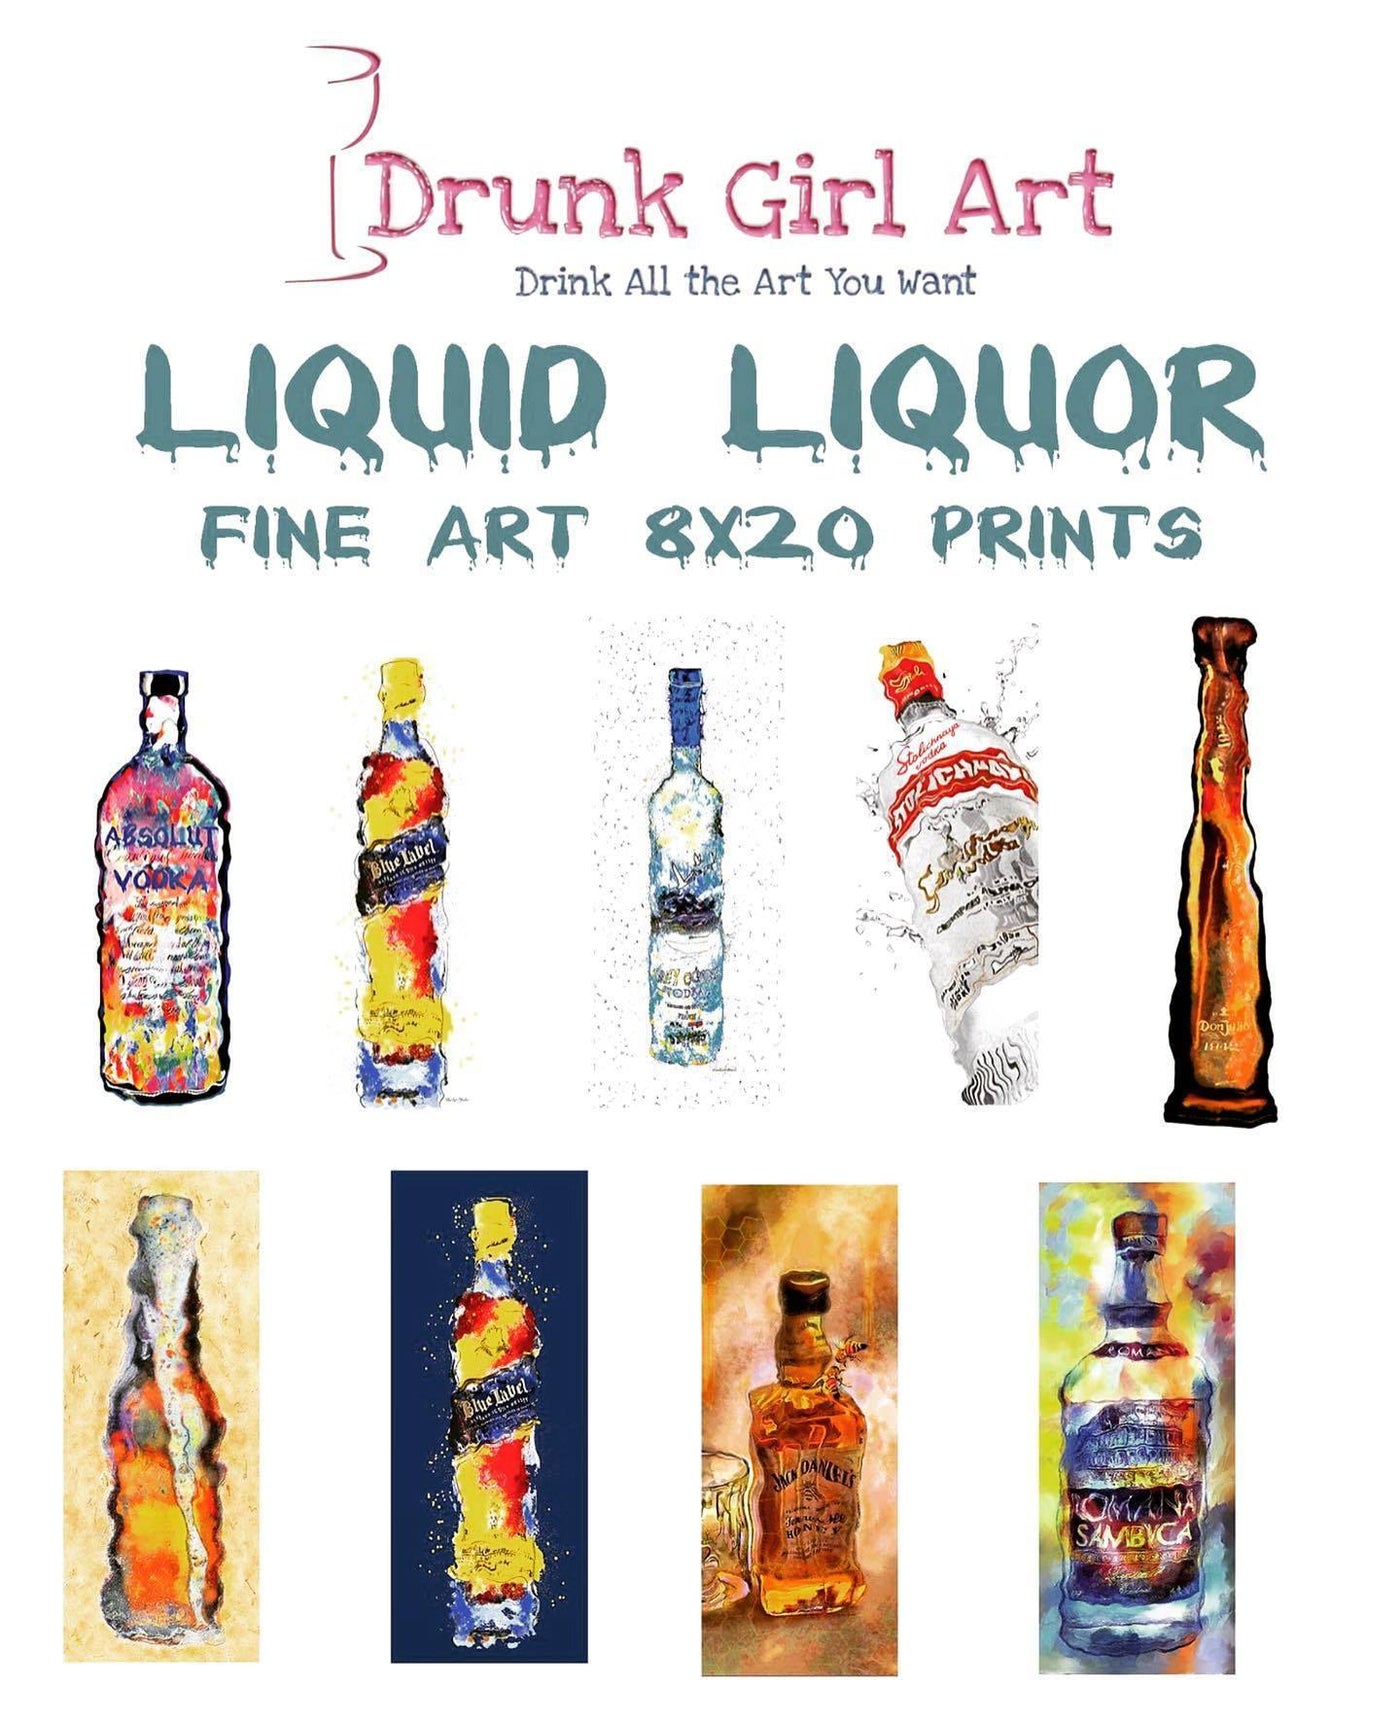 #liquidliquor @drunkgirlart #drinkalltheartyouwant 8x20 Fine... - Drunk Girl Art